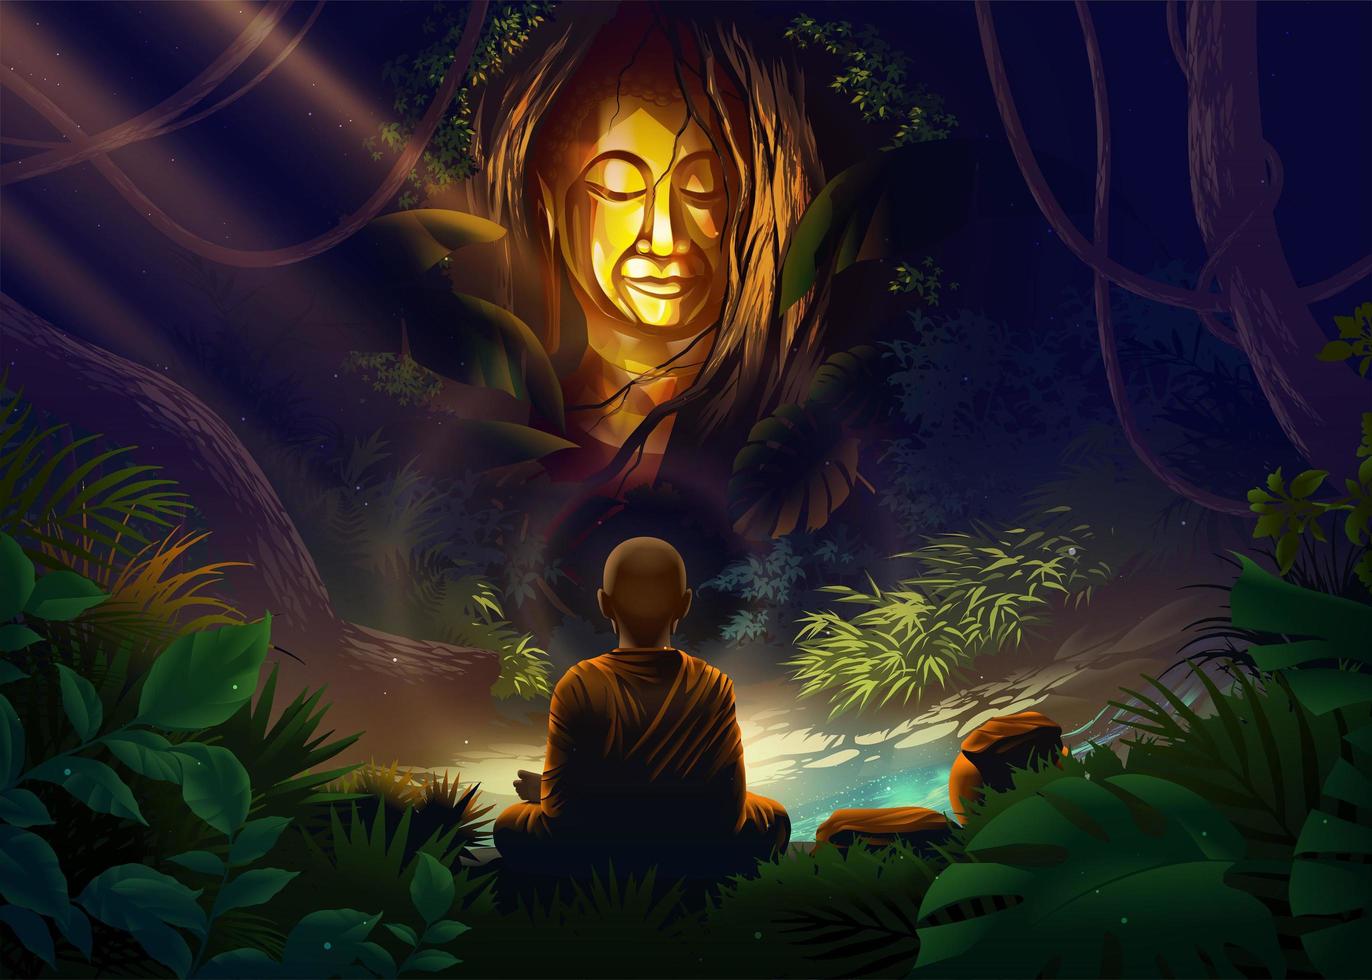 un monje arahant o un monje santo está meditando frente a la misteriosa estatua de buda que está cubierta de densas plantas en el misterioso bosque. vector